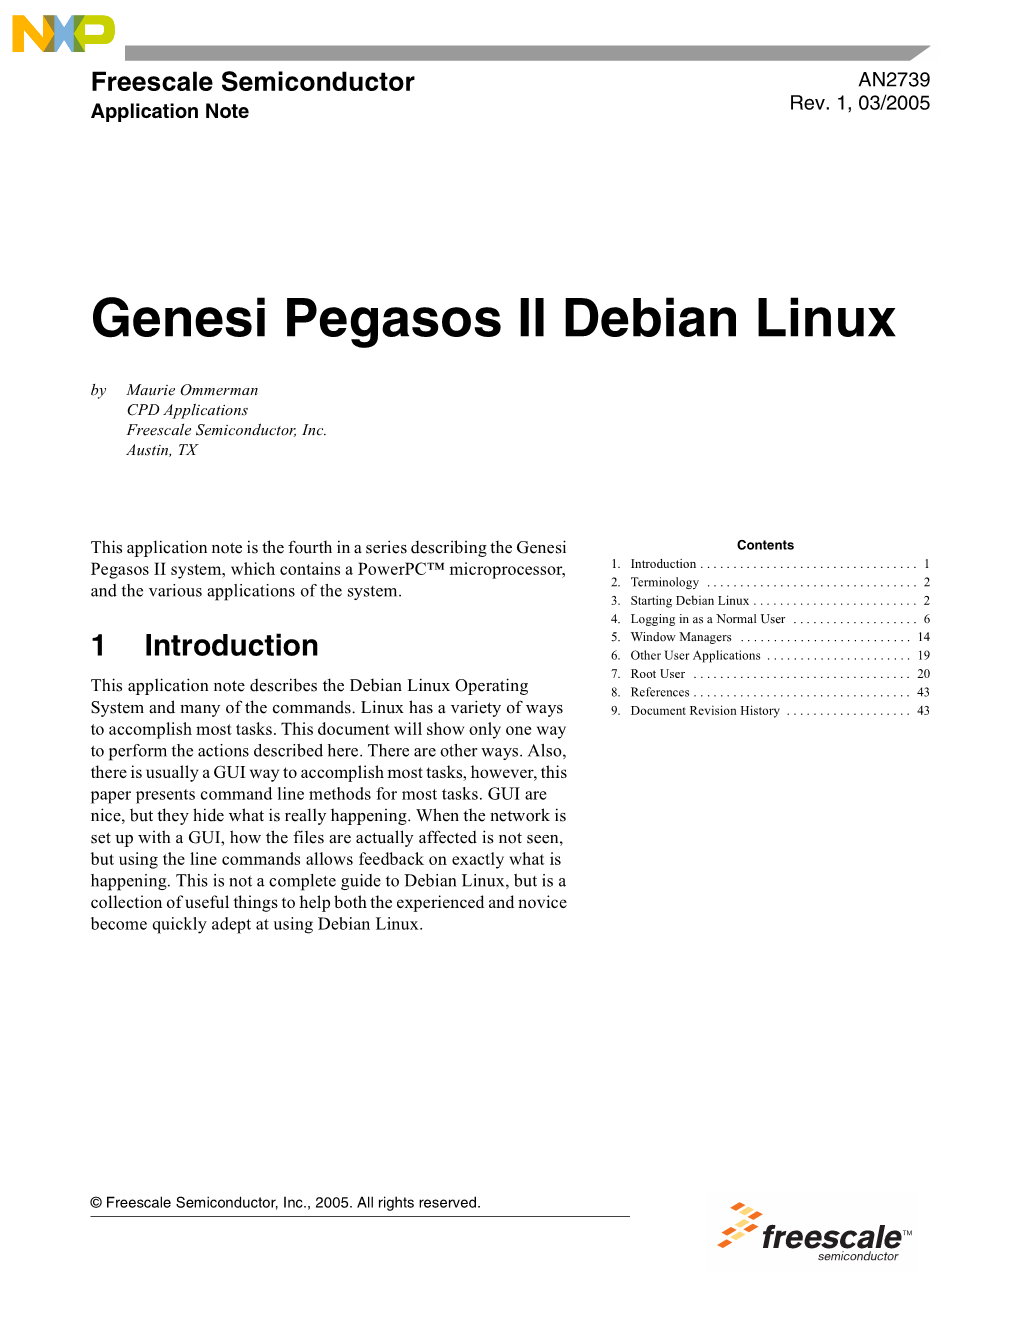 Genesi Pegasos II Debian Linux by Maurie Ommerman CPD Applications Freescale Semiconductor, Inc